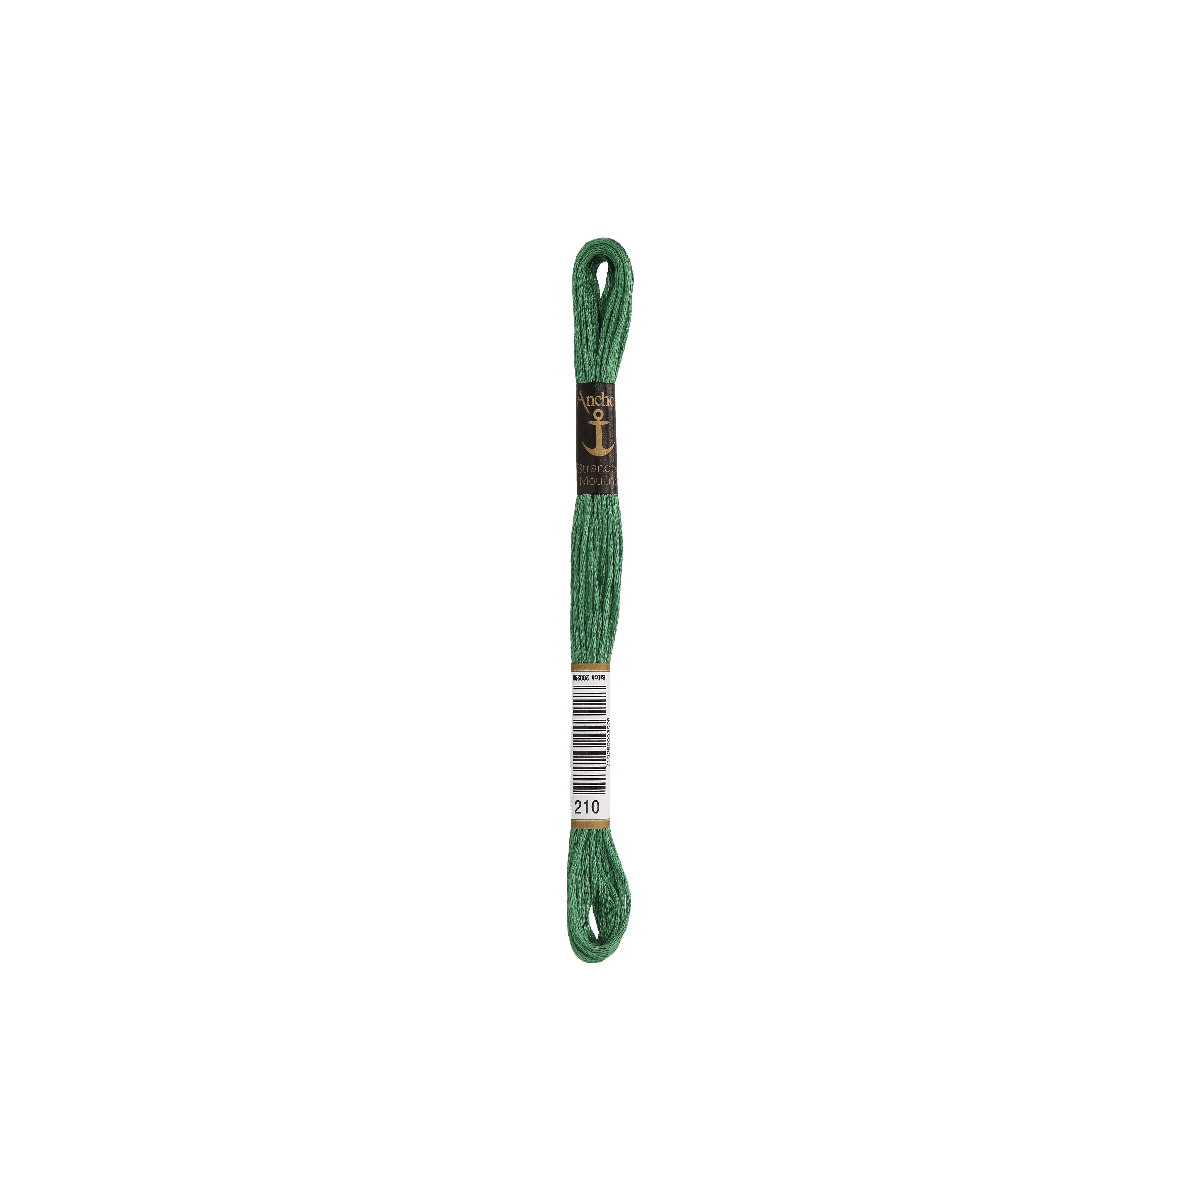 Anchor Torsade 8m, vert prairie, coton, couleur 210, 6 fils